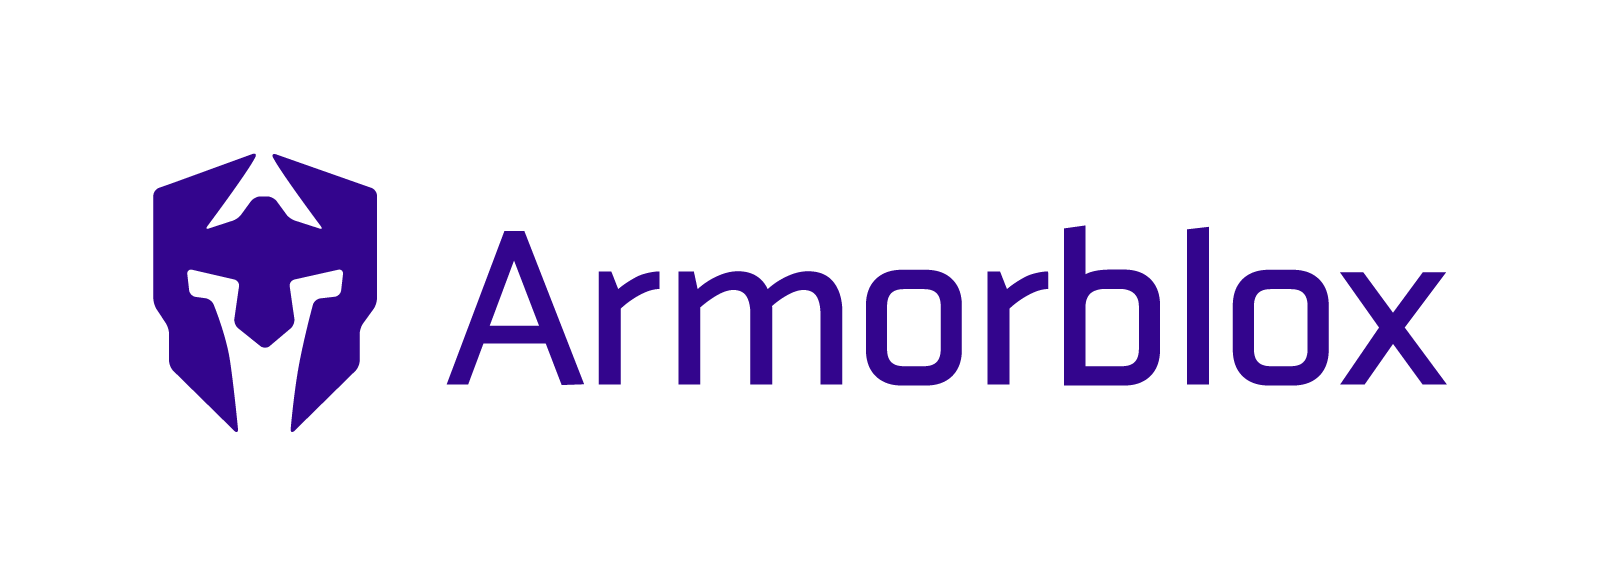 armorblox_logo_-33058d_1600px.png